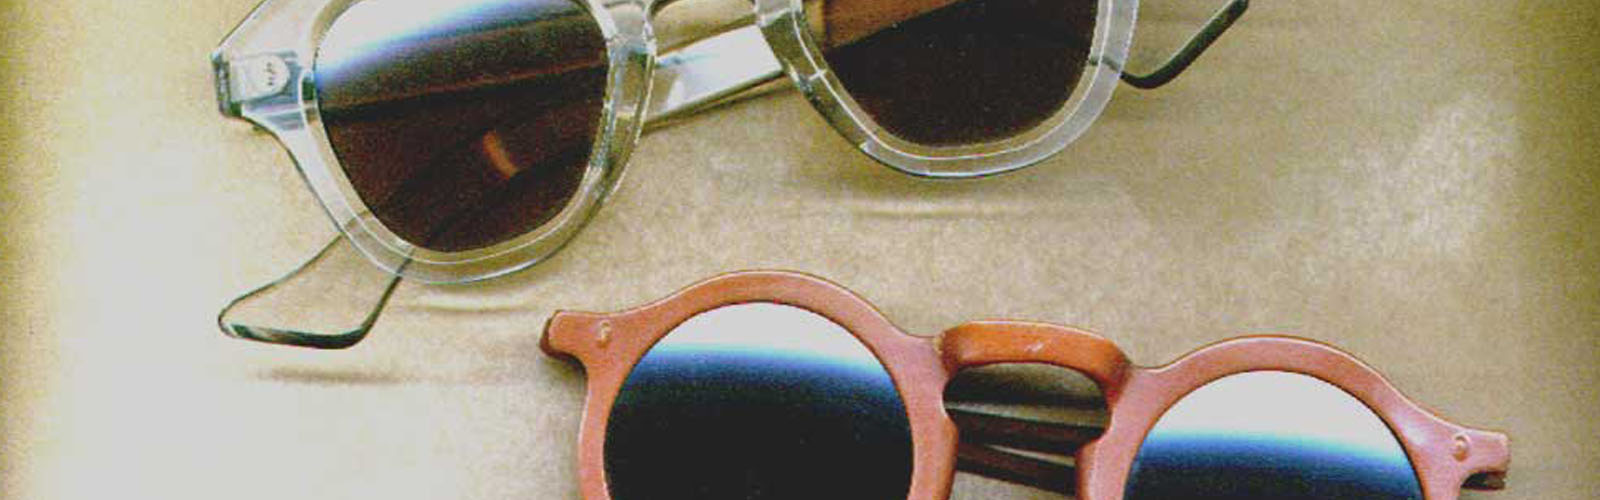 Brief history of sunglasses